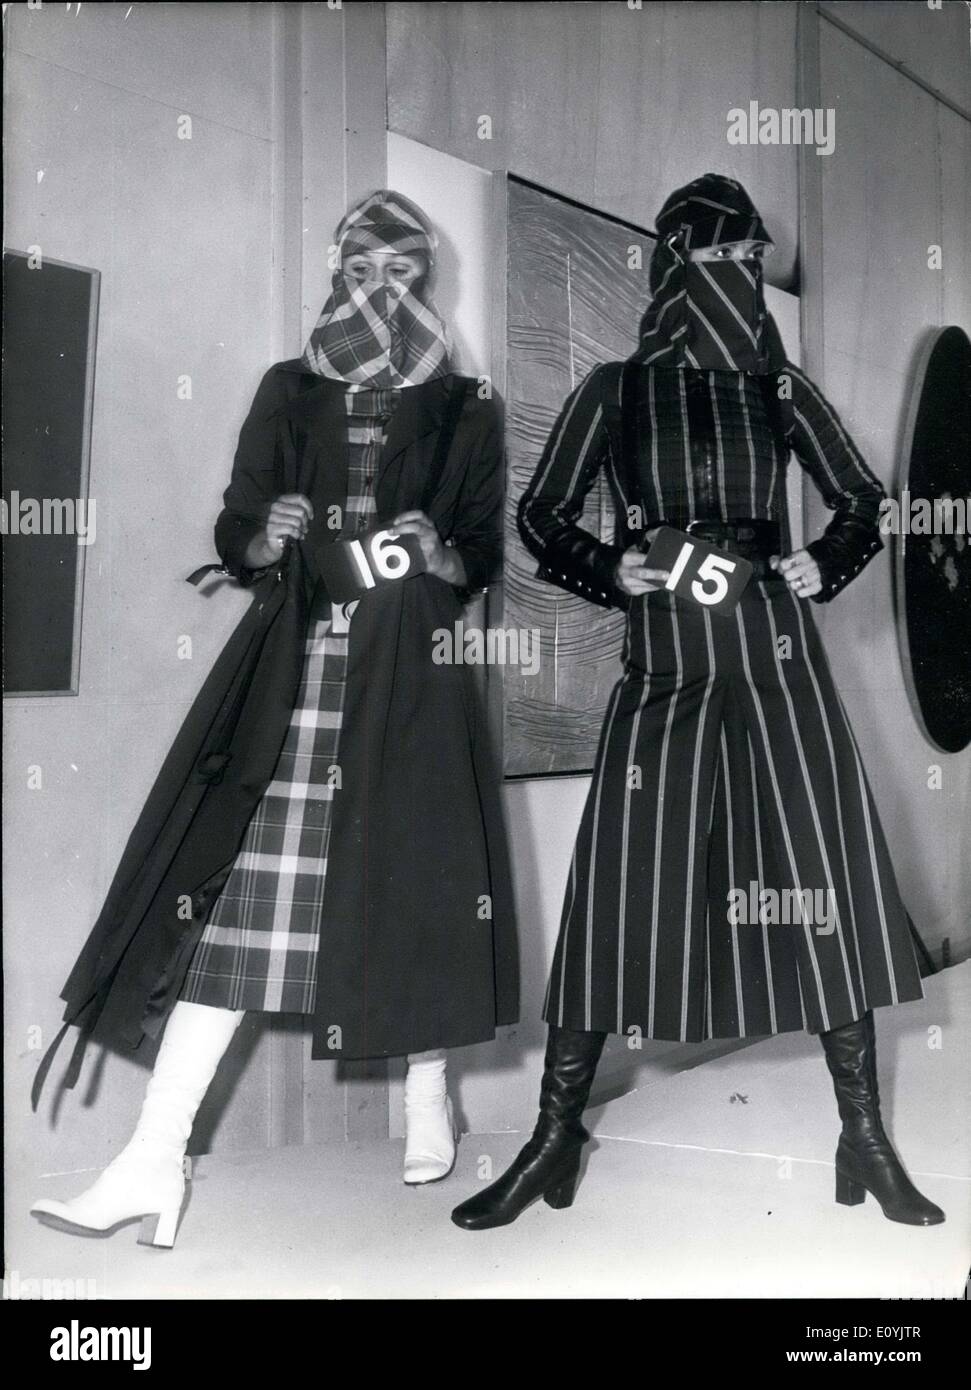 Jul. 23, 1970 - Models Present Louis Feraud Suits With Balaclavas &  Backpacks ESS.c Stock Photo - Alamy